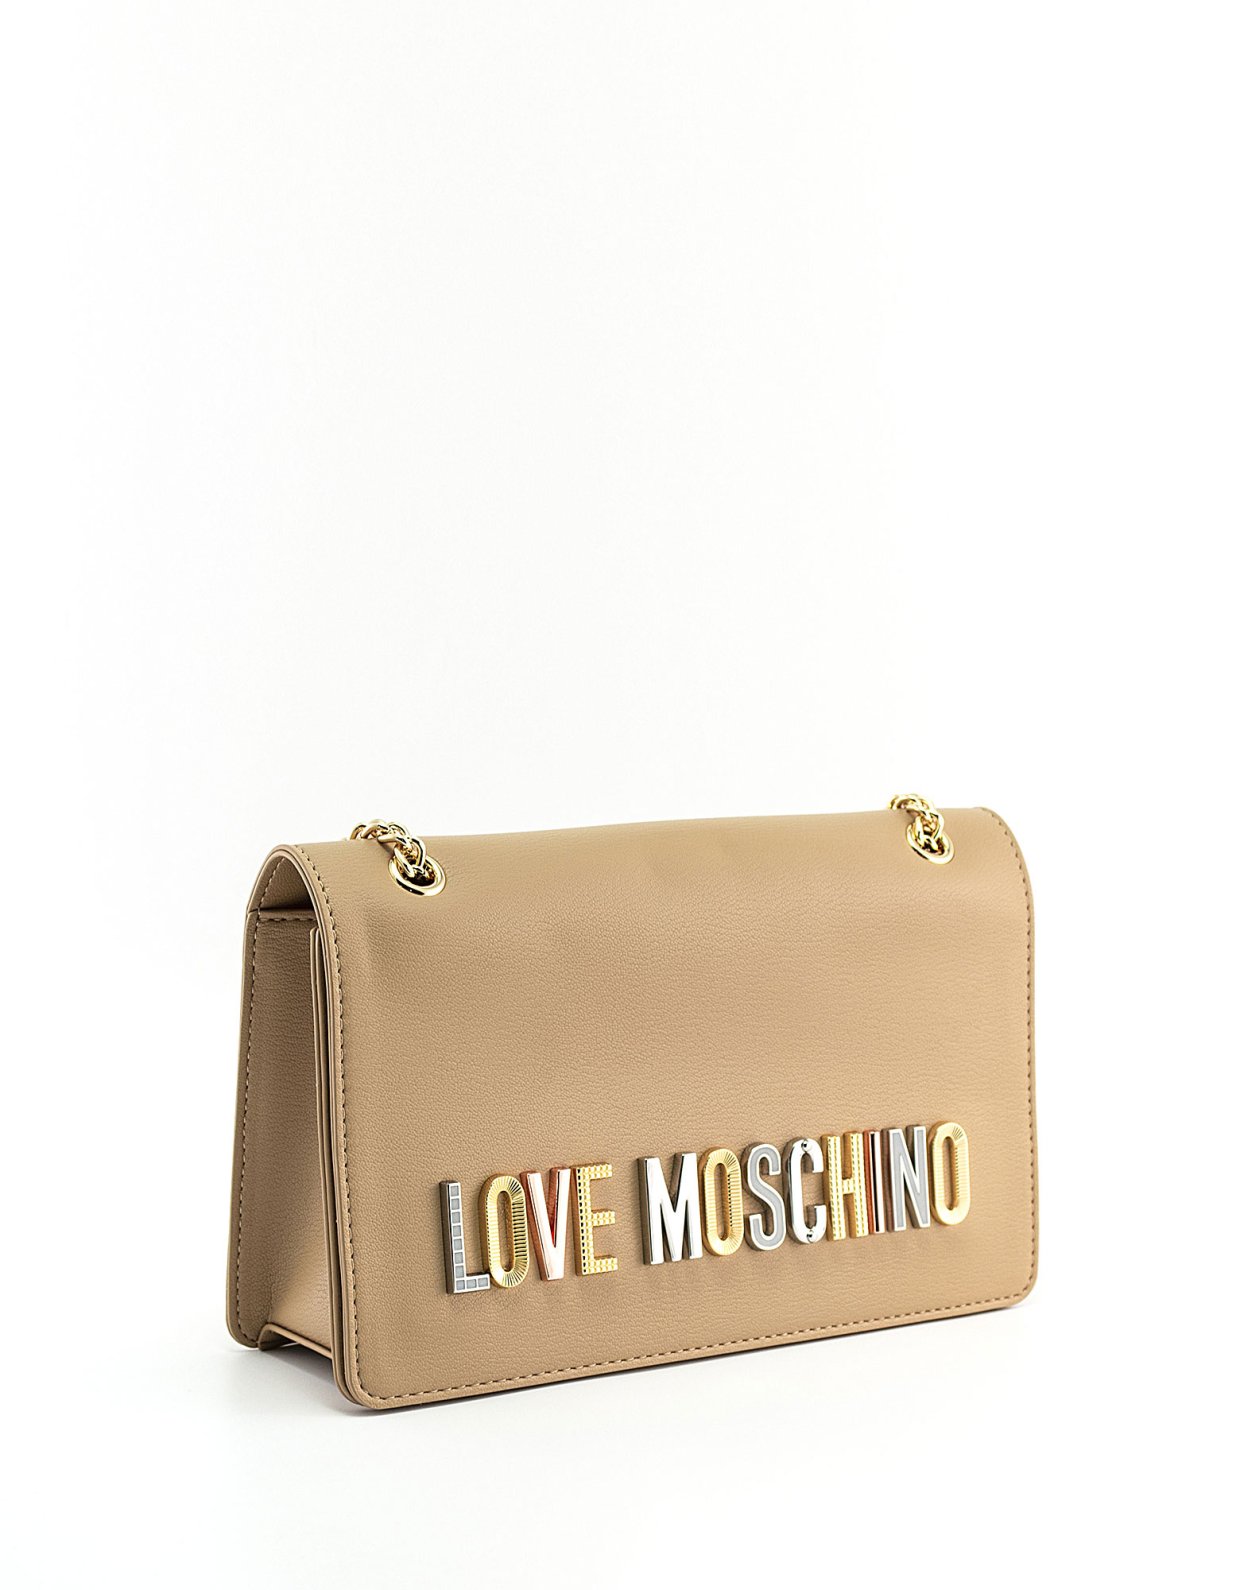 Love Moschino Colorful logo shoulder bag camel